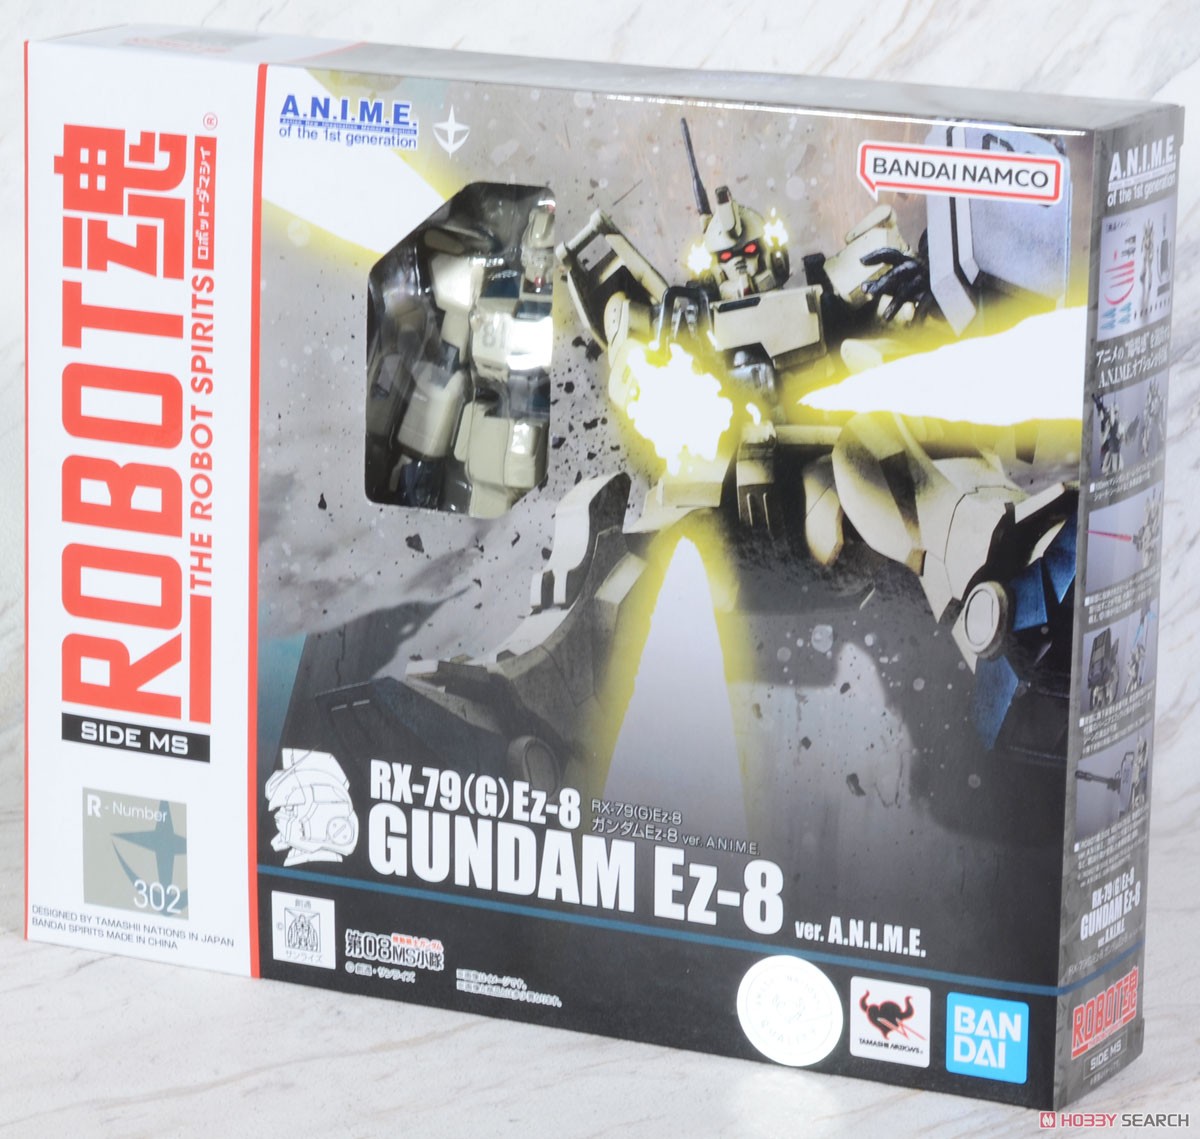 Robot Spirits < Side MS > RX-79(G)Ez-8 Gundam Ez-8 Ver. A.N.I.M.E. (Completed) Package1